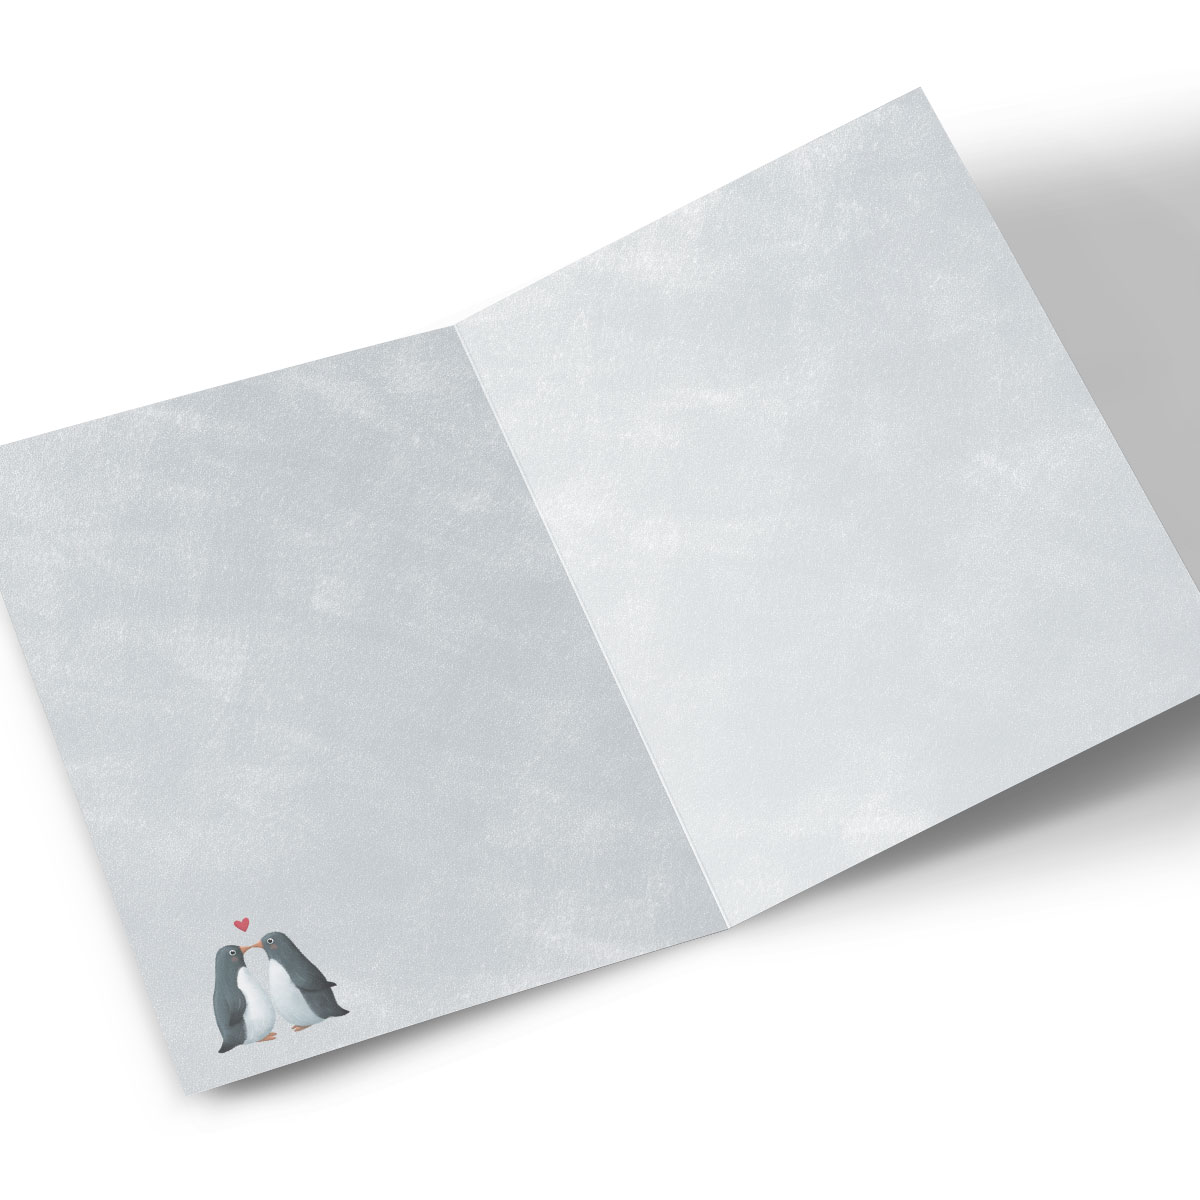 Personalised Birthday Card - Penguin Love